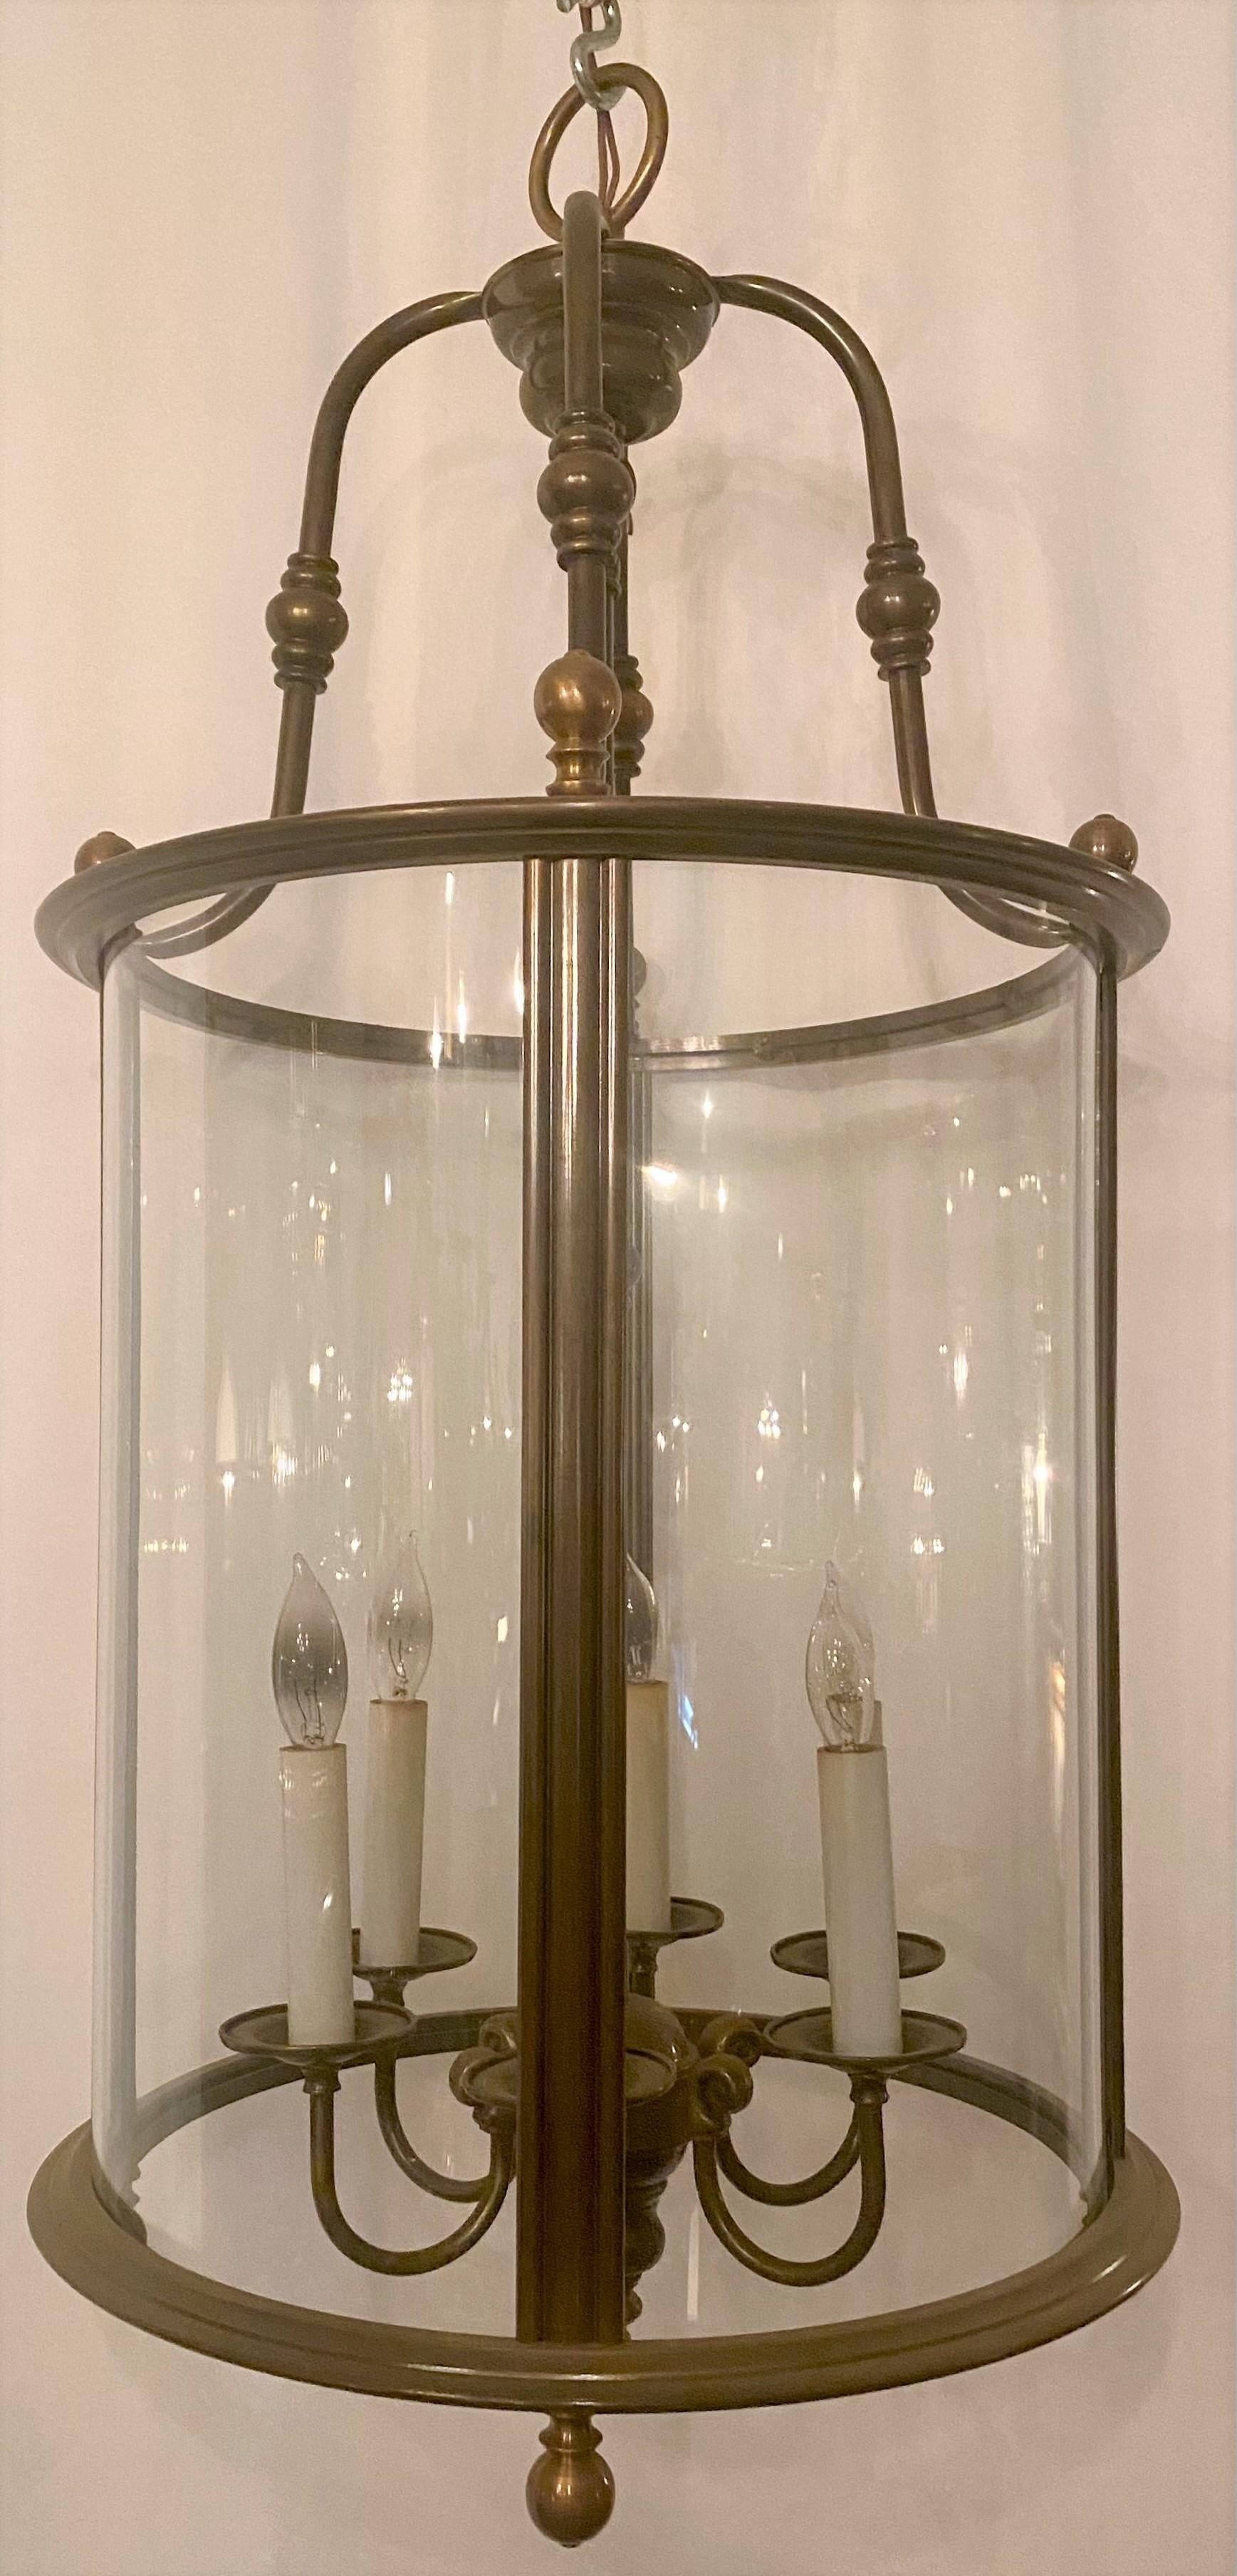 Handmade European brass lantern with 6 lights
LAN007.